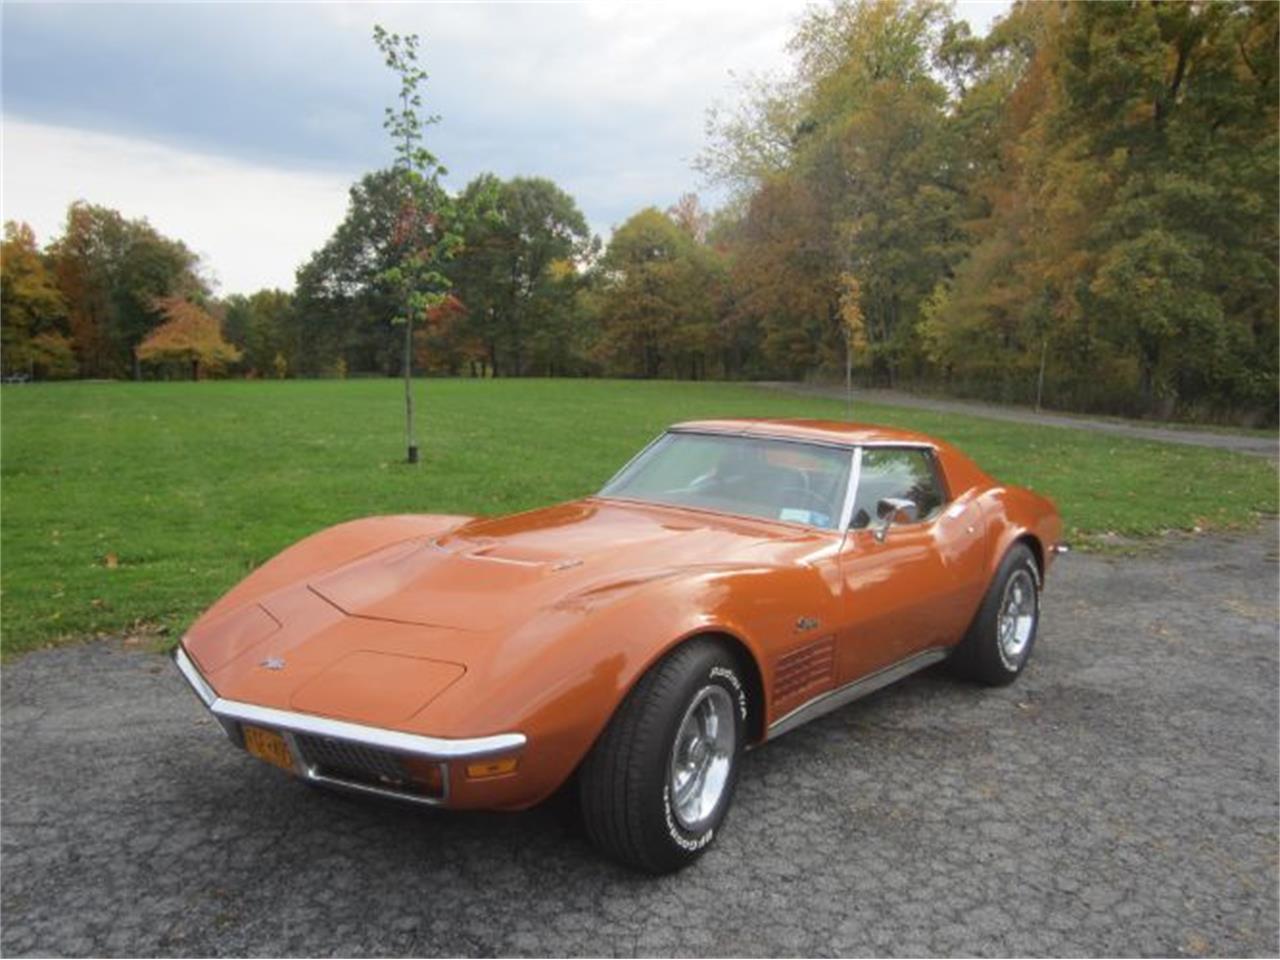 For Sale: 1972 Chevrolet Corvette in Cadillac, Michigan for sale in Cadillac, MI